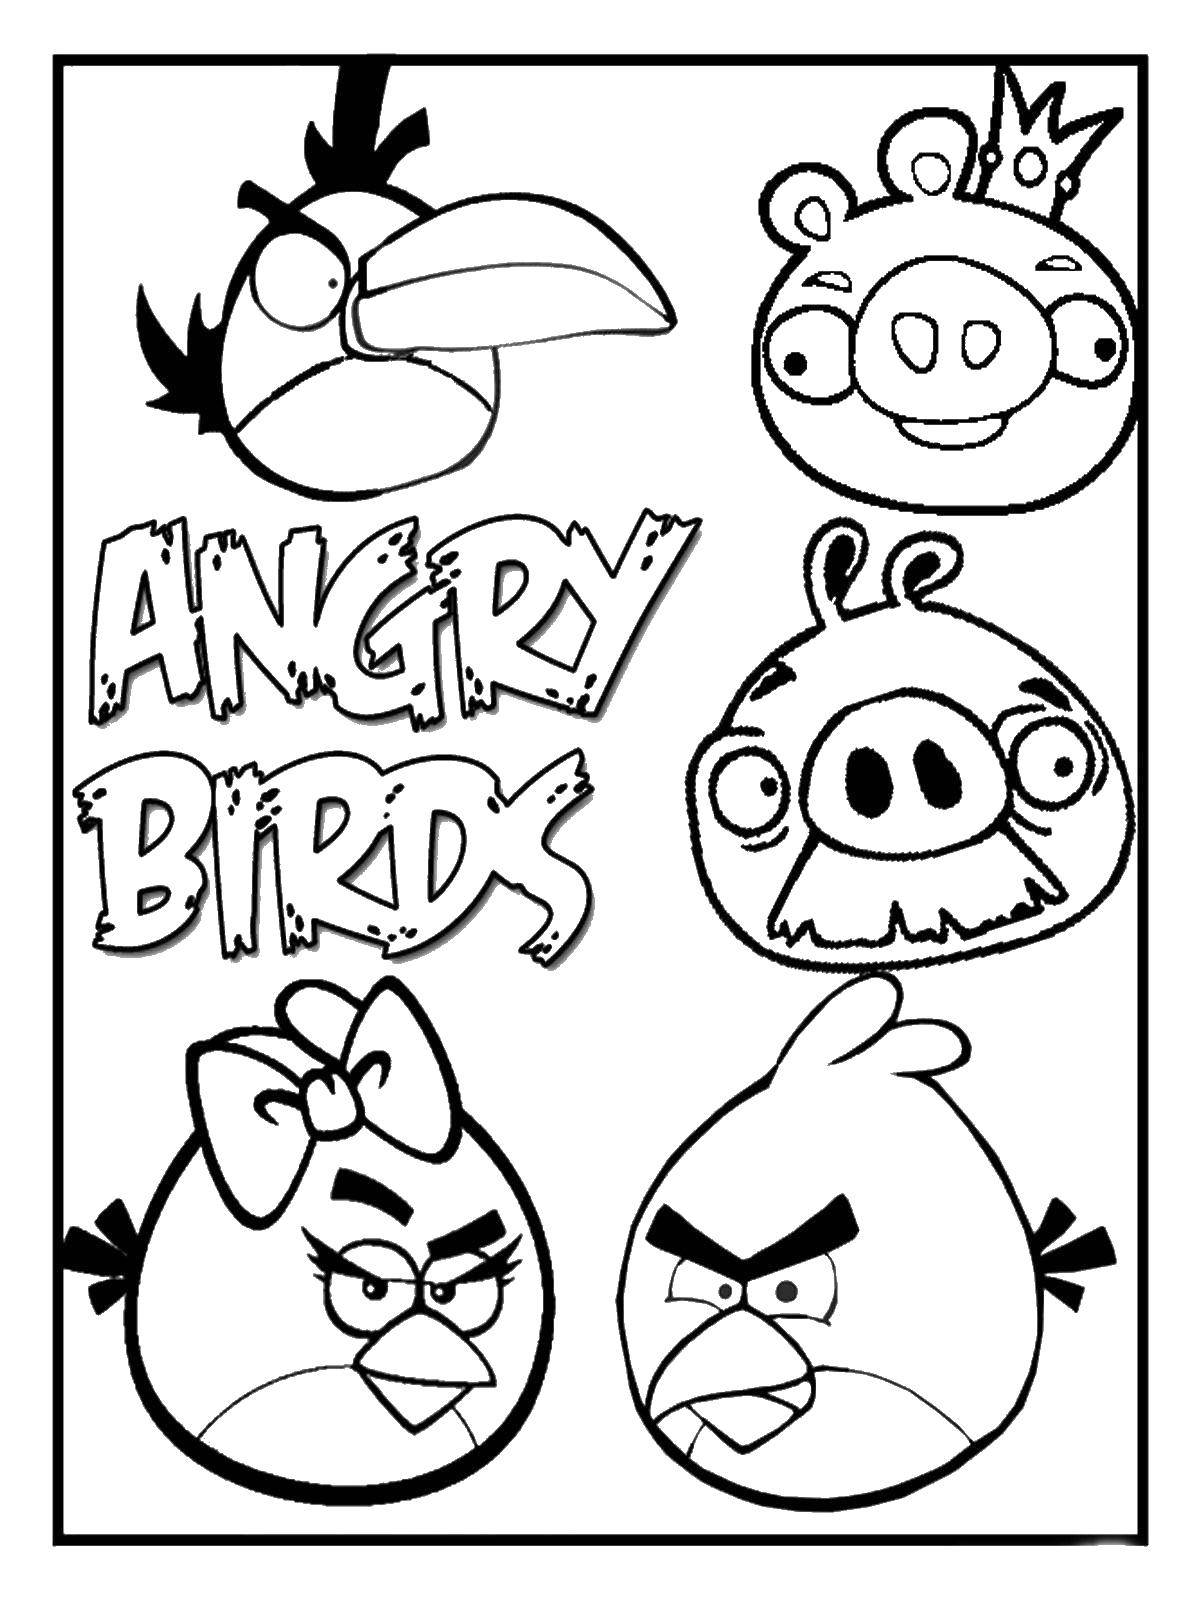   Angry birds и король свин